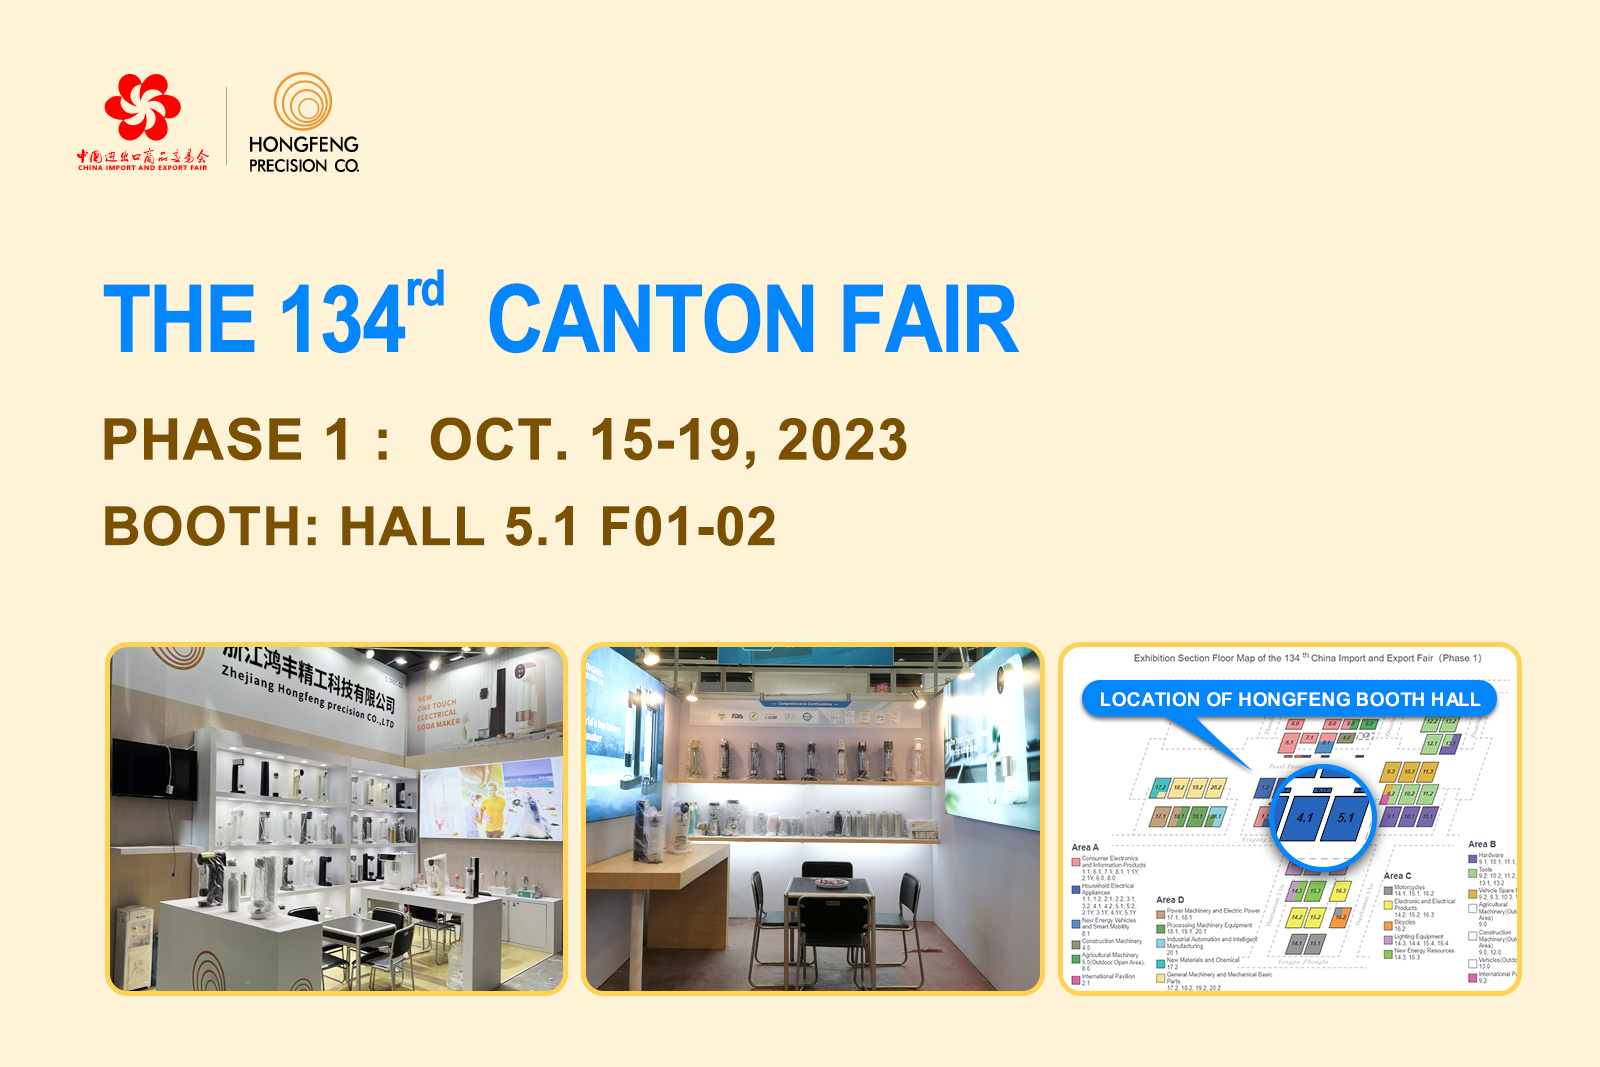 Zhejiang Hongfeng Precision Co., Ltd. brings innovative home appliances to the 2023 Canton Fair